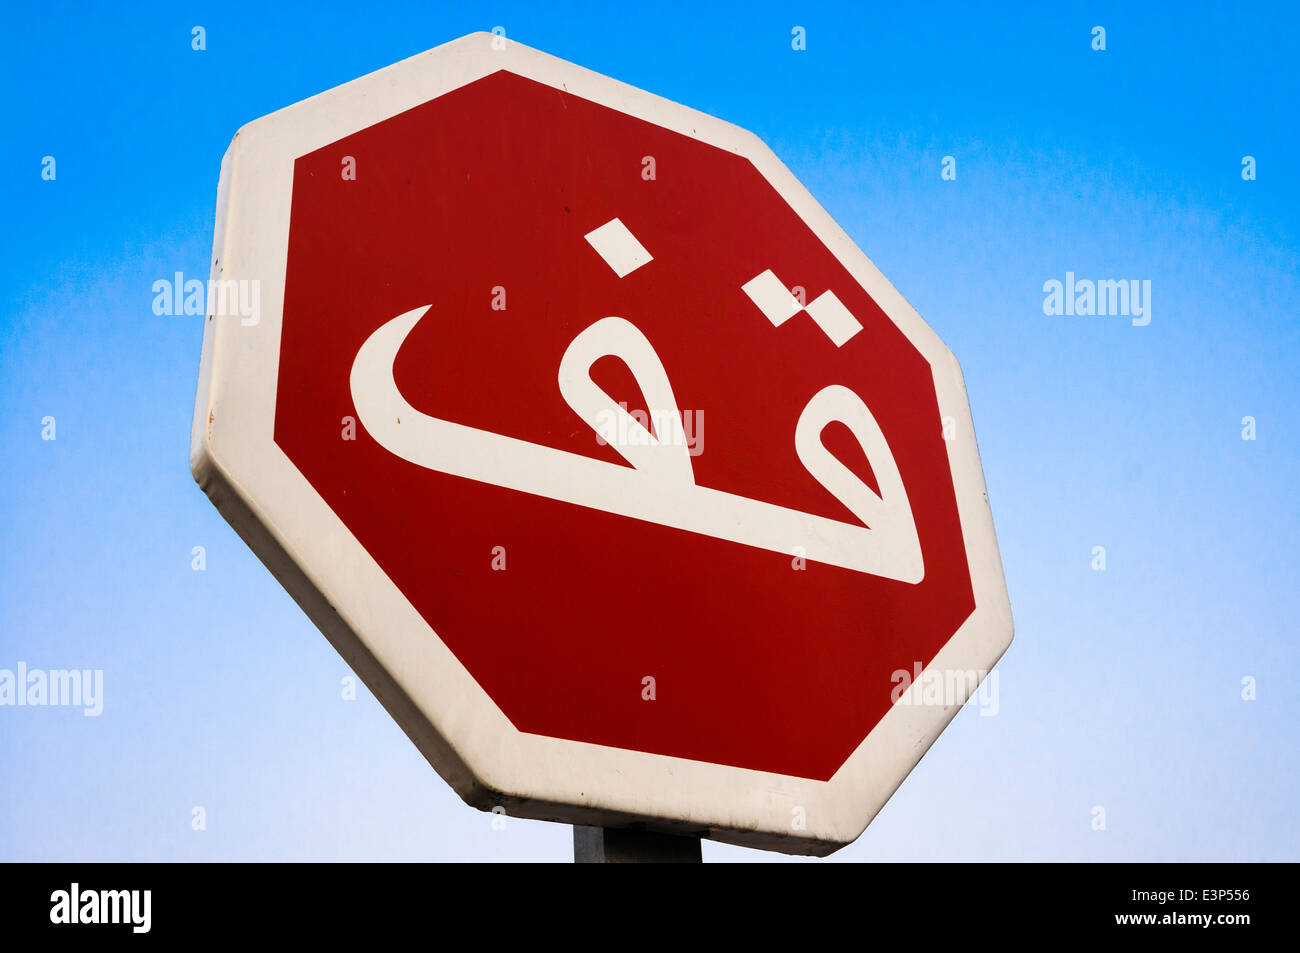 Stop sign in Arabic, Morocco Stock Photo